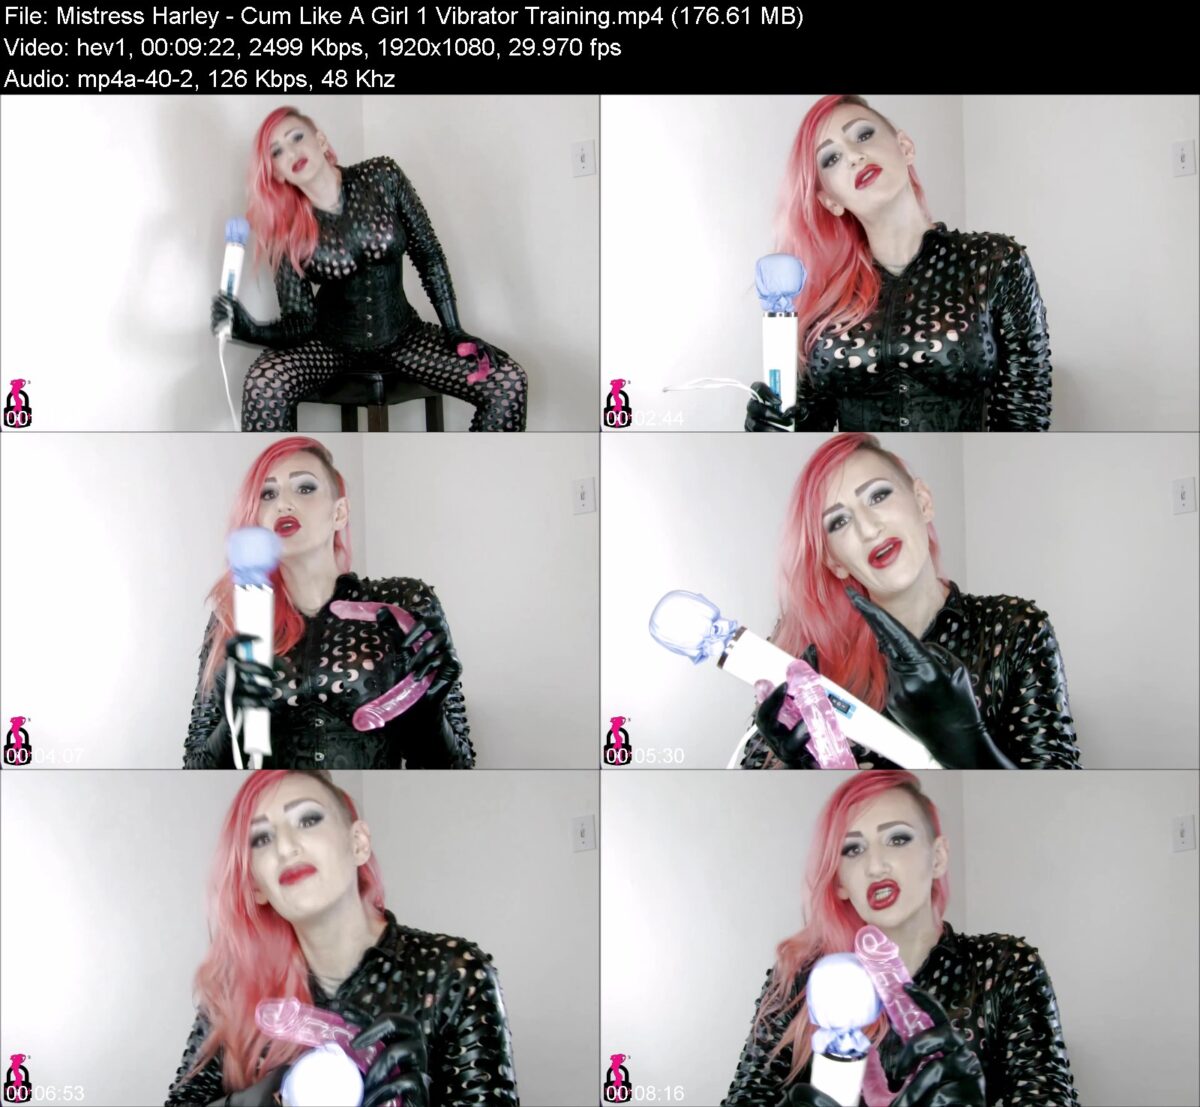 Mistress Harley in Cum Like A Girl 1 Vibrator Training